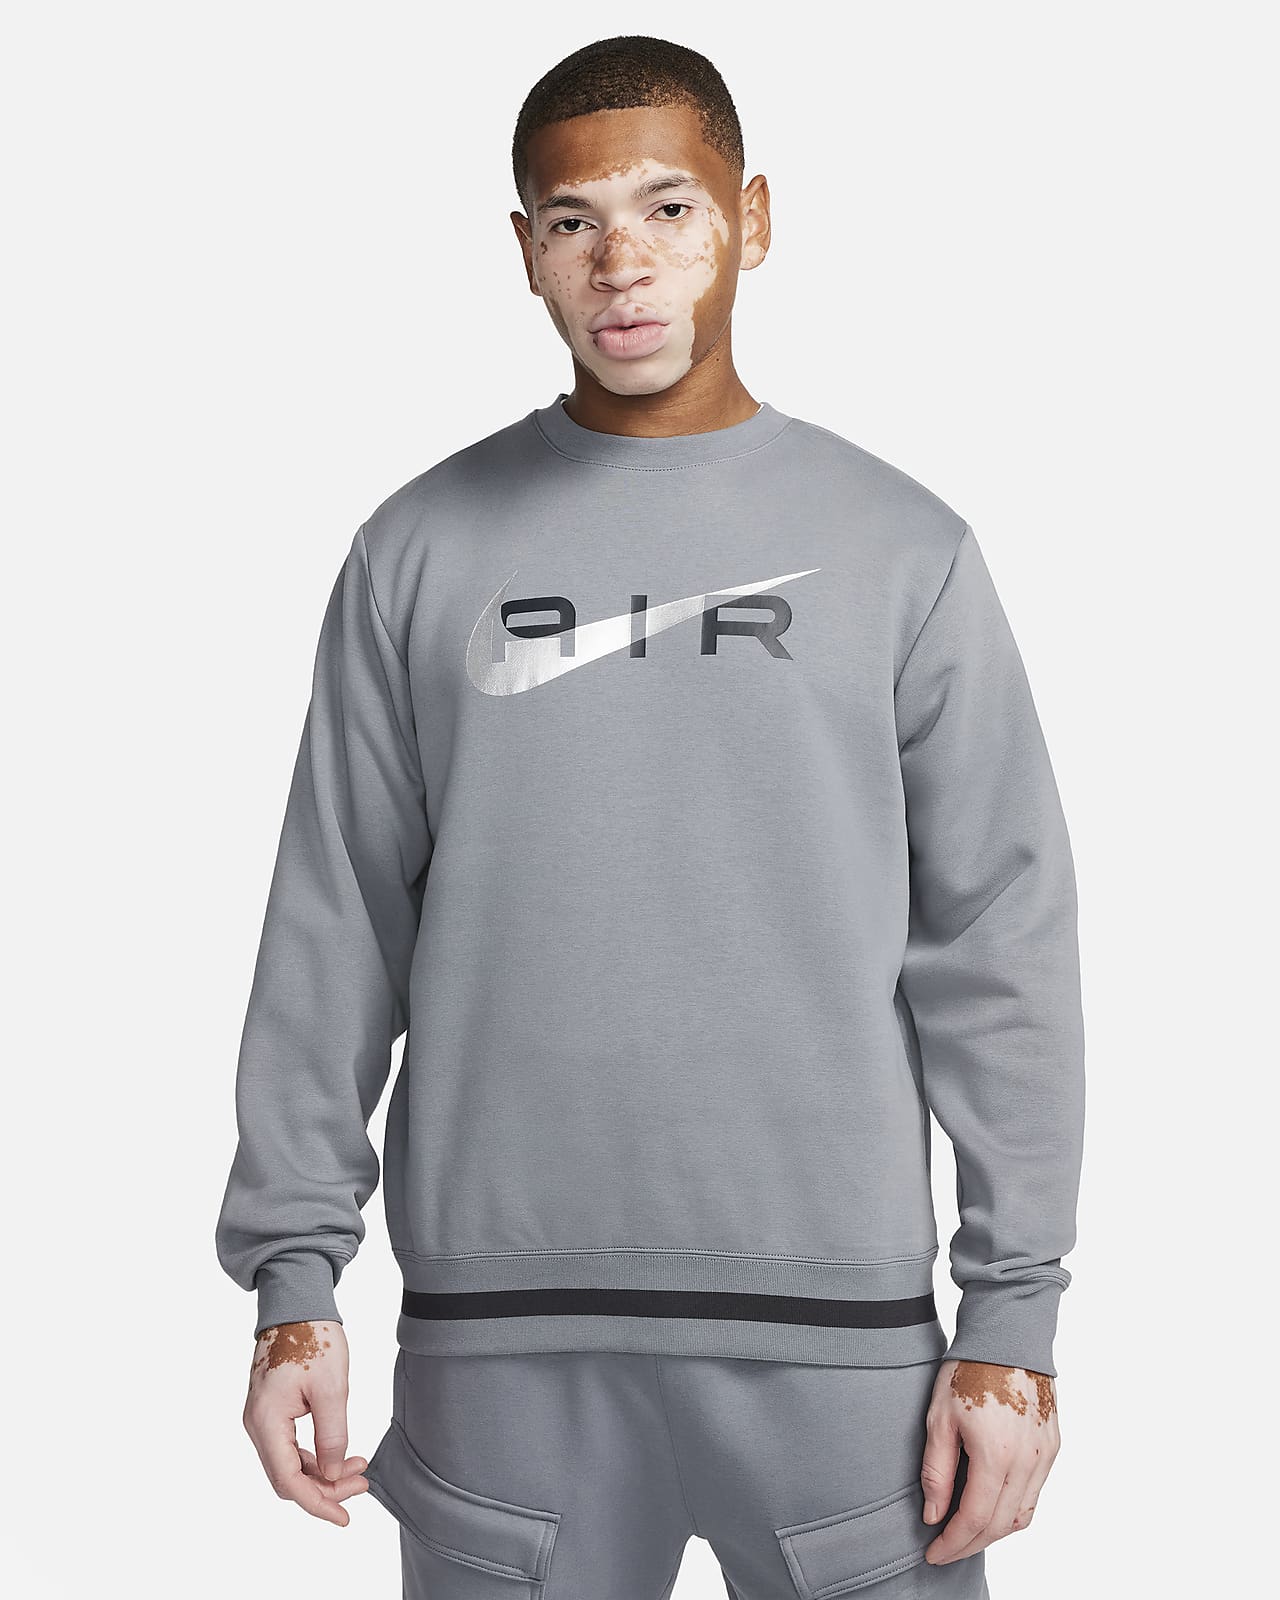 Nike Air Men's Fleece Crew-Neck Sweatshirt. Nike LU